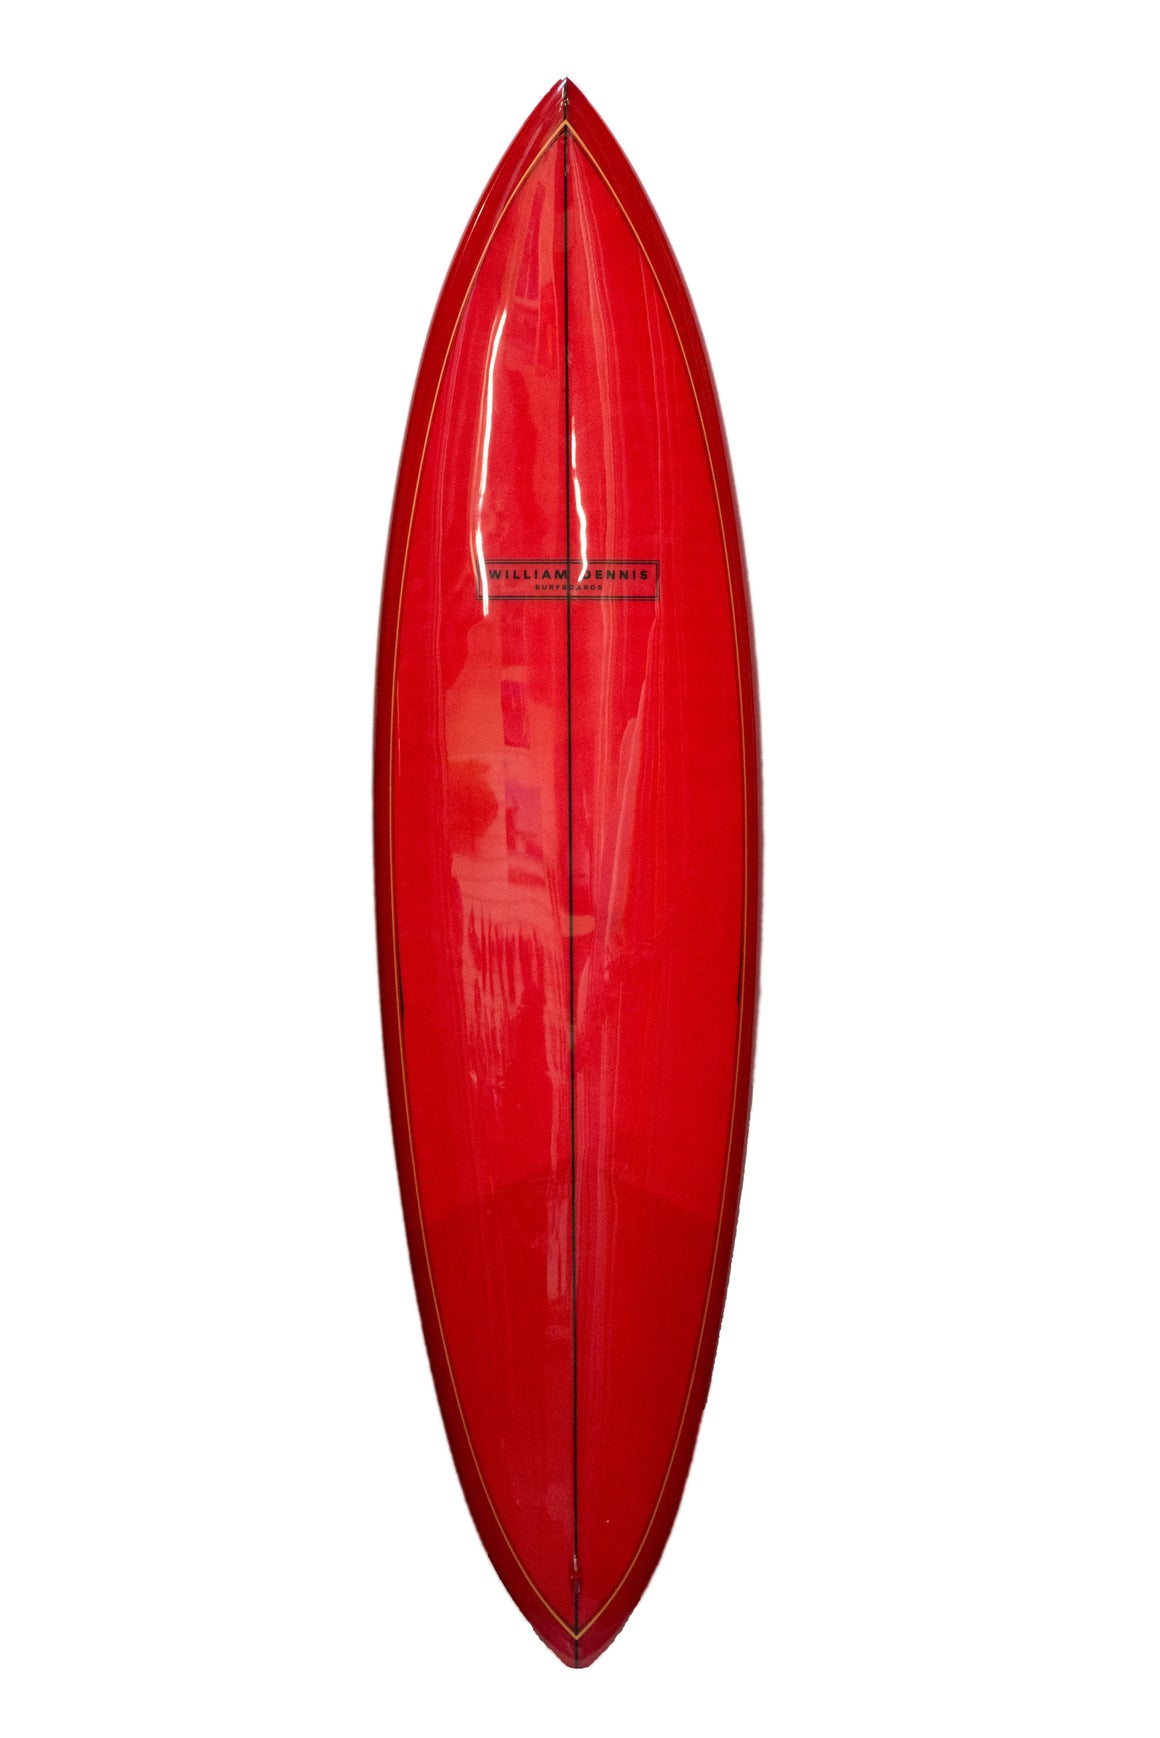 William Dennis Custom "Pintail" ShortBoard - Ventura Surf Shop